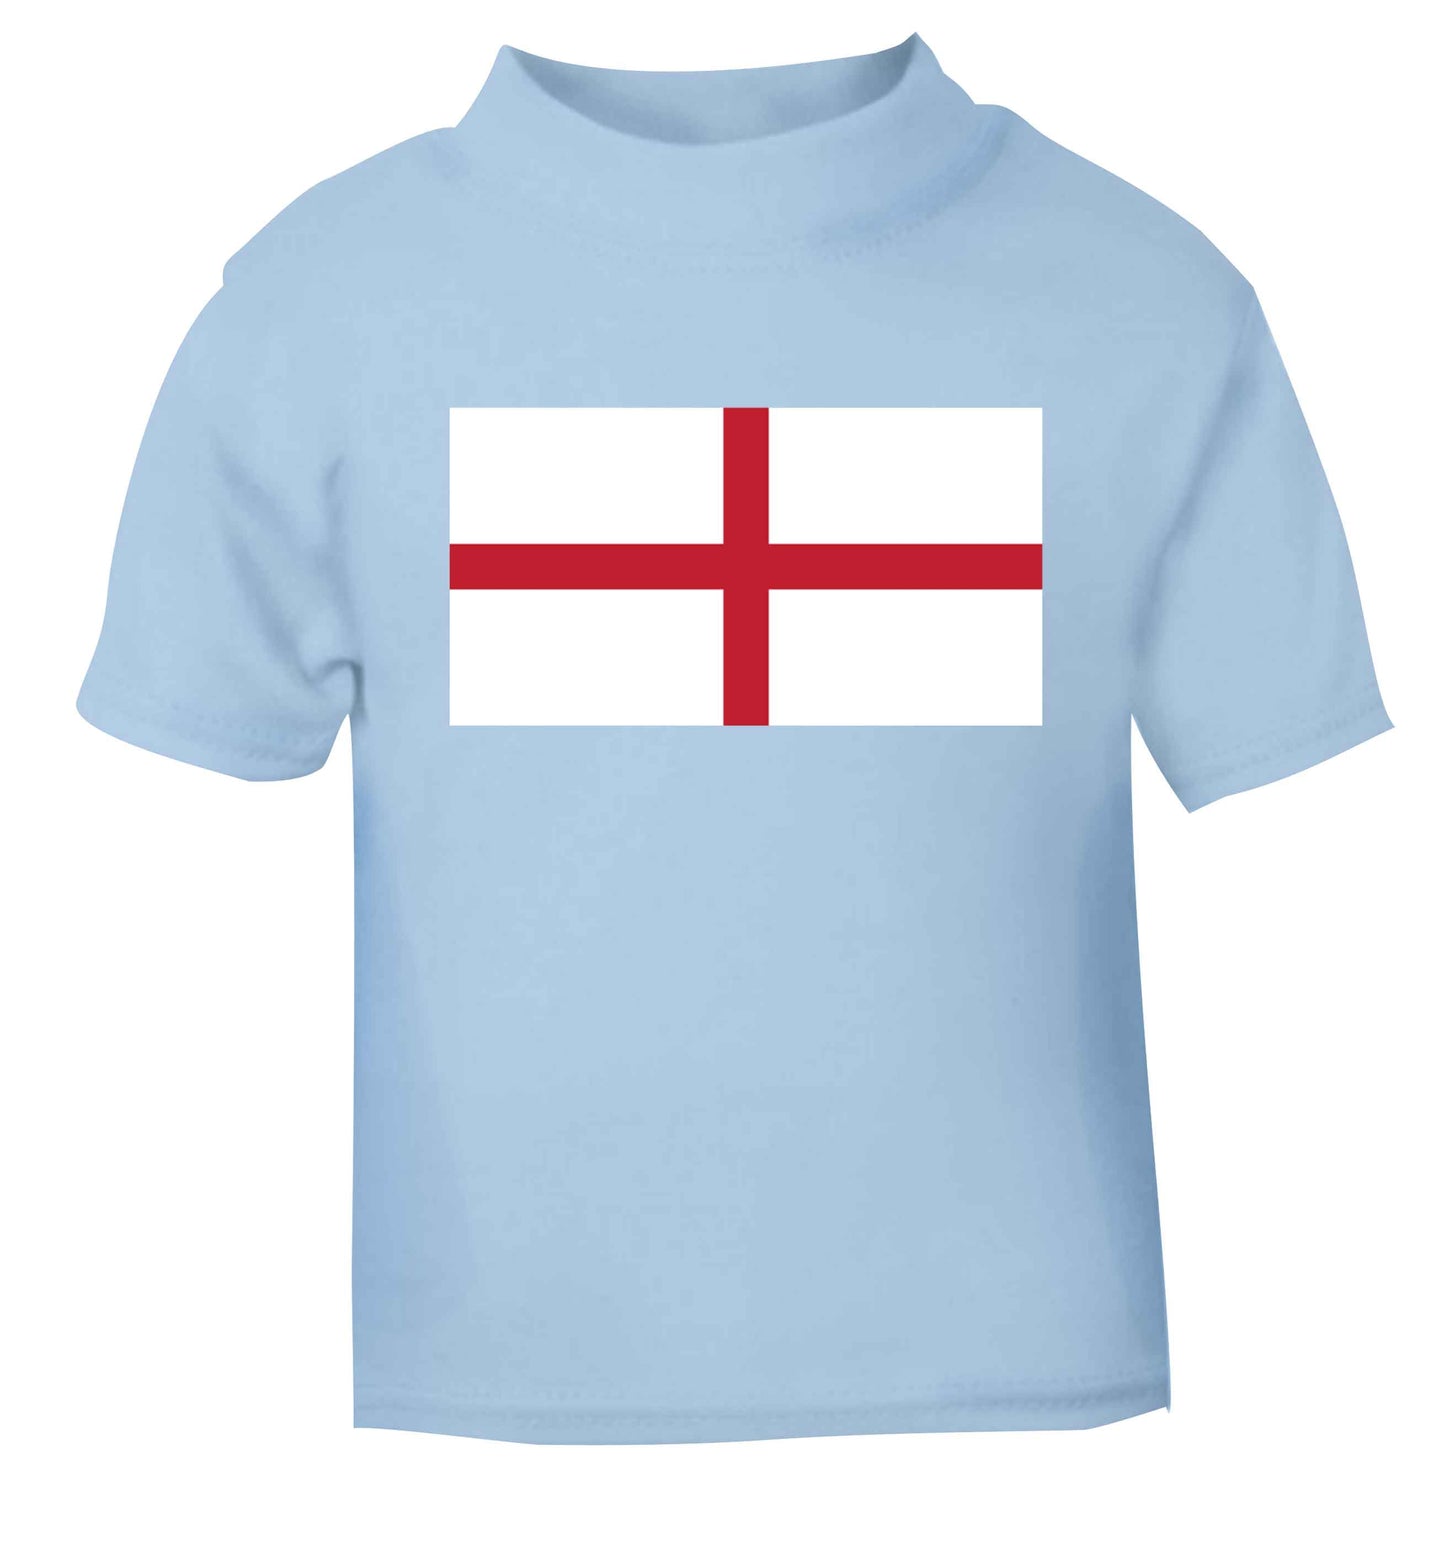 England Flag light blue baby toddler Tshirt 2 Years